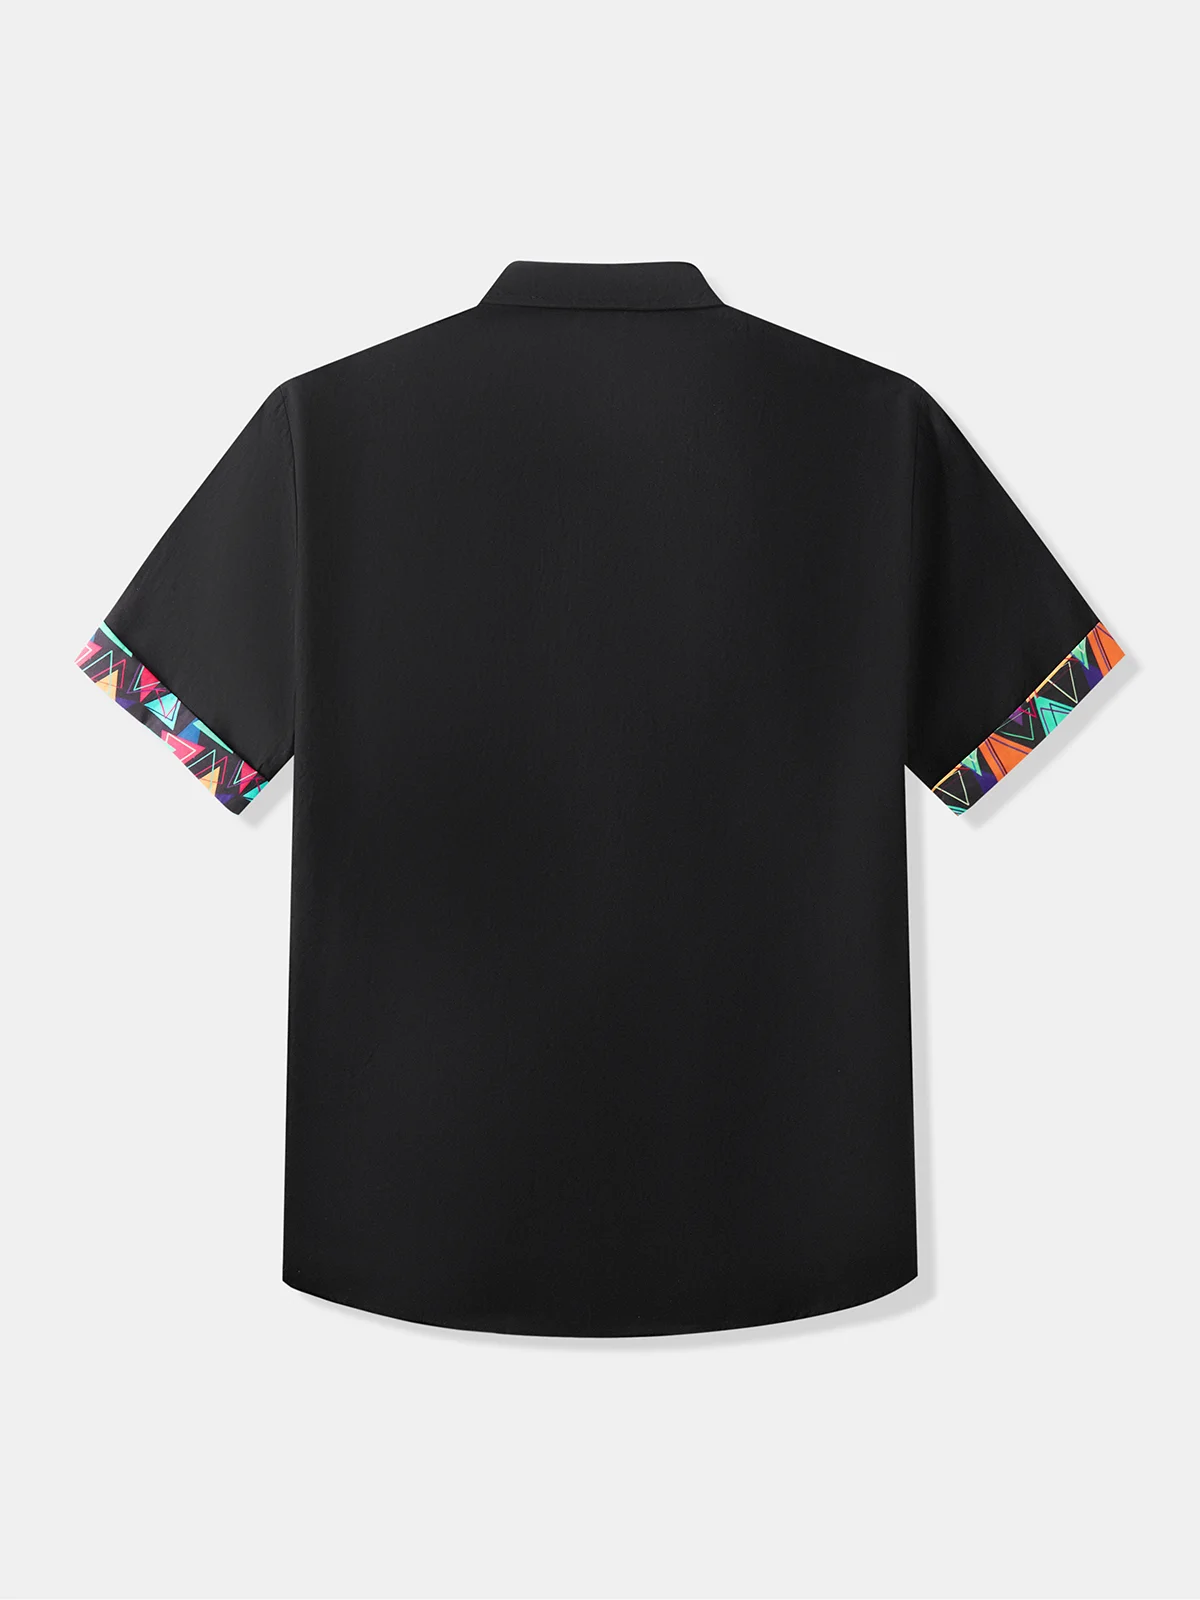 Hardaddy 100% Cotton Black Patchwork Short Sleeve Resort Comfy Shirt Hawaiian Daily Shirt